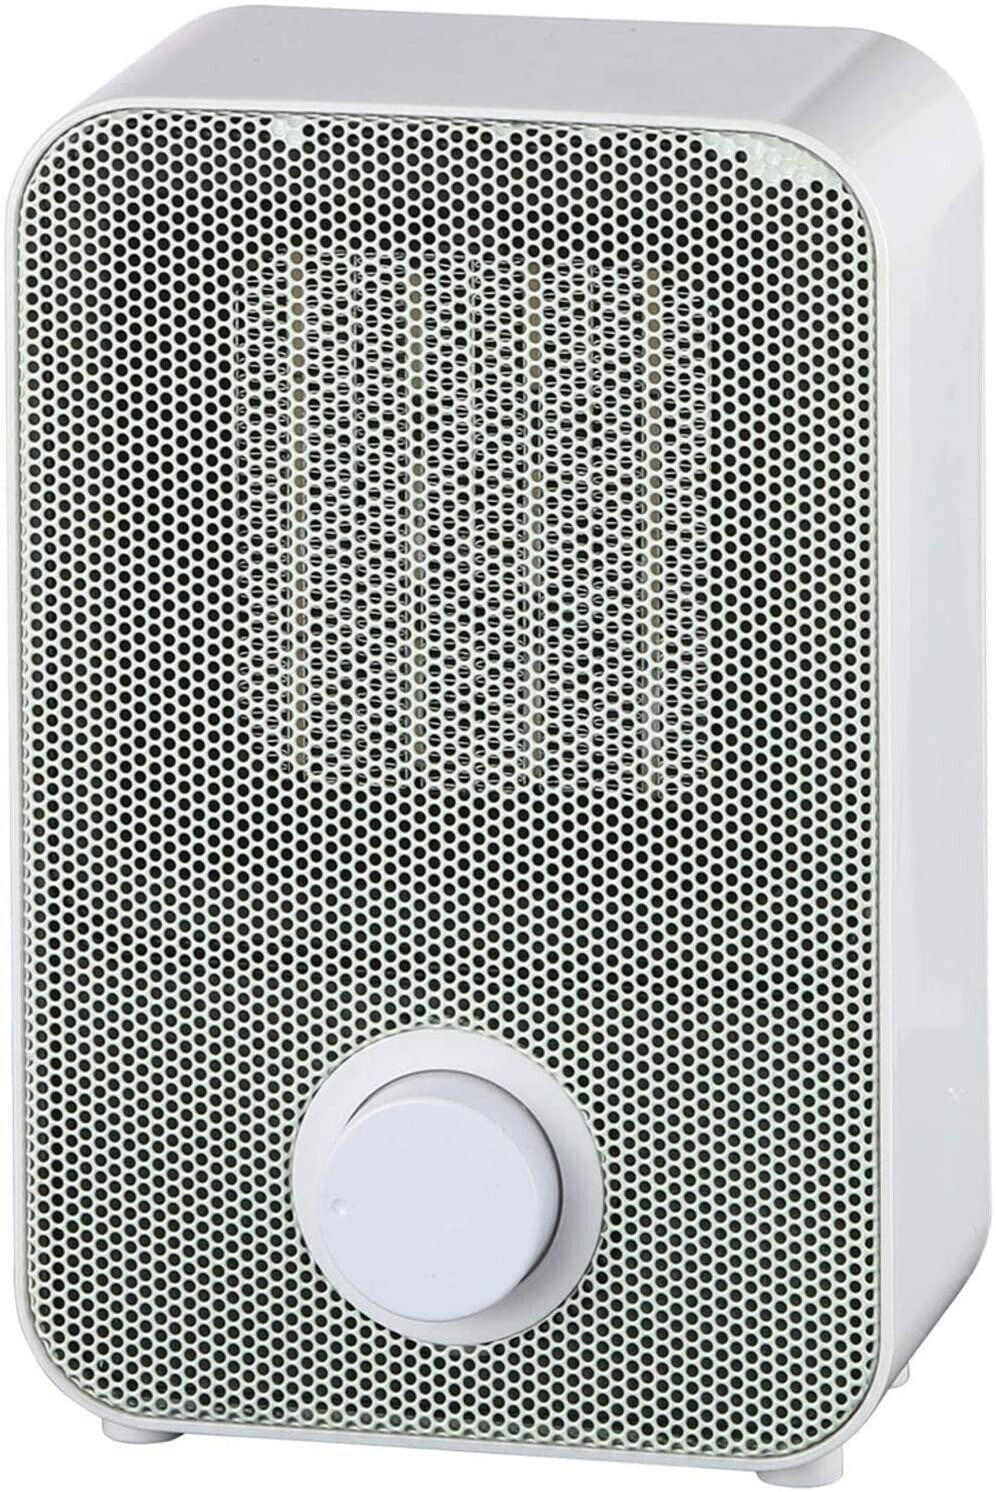 Kingavon PTC Ceramic Portable Space Heater